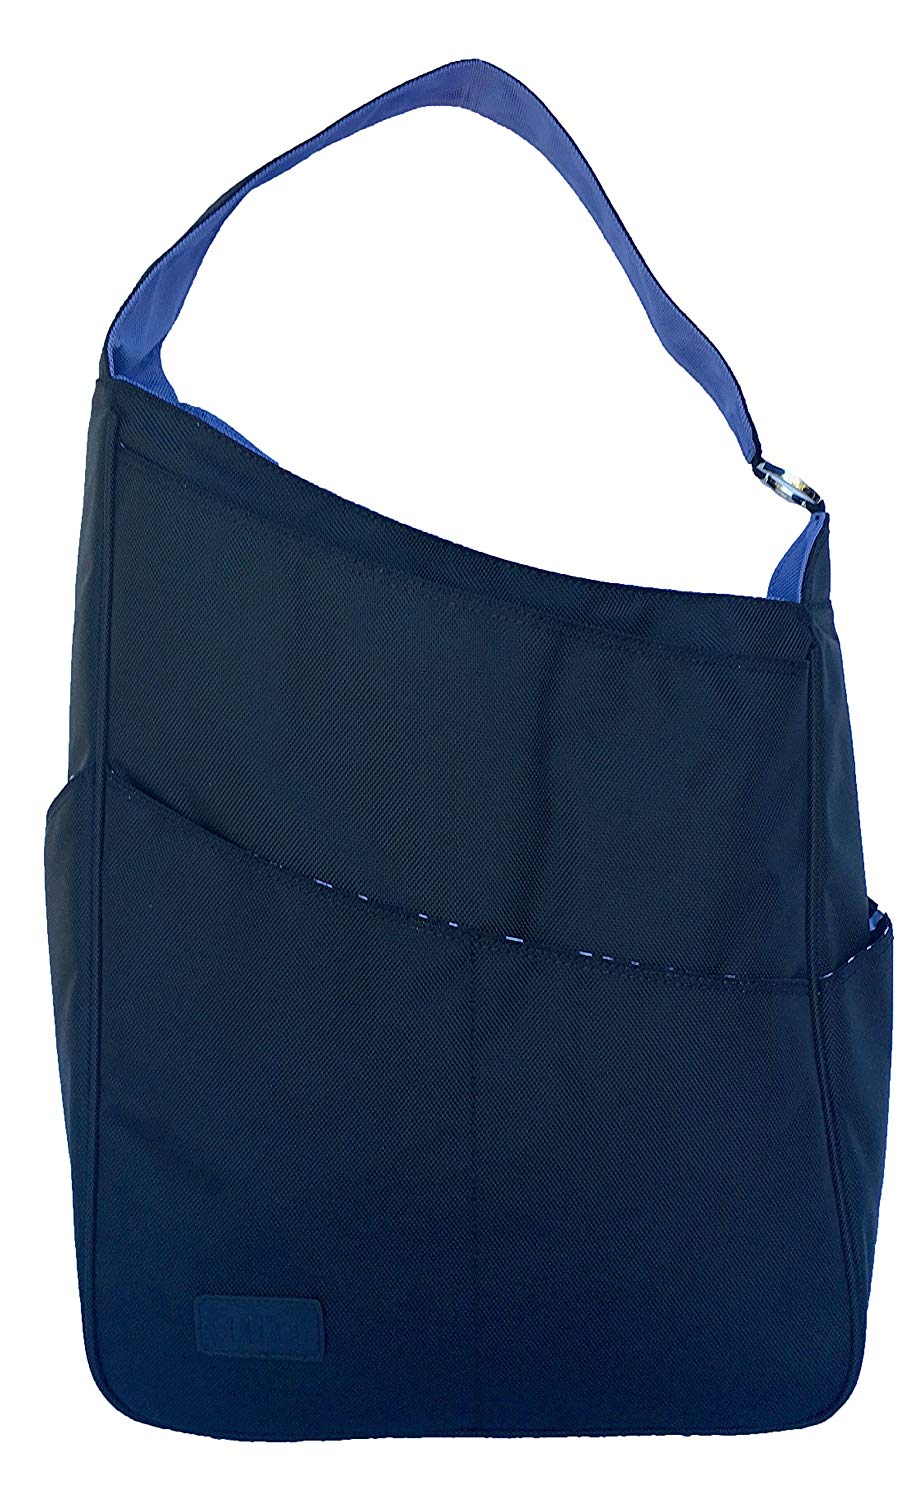 Maggie Mather Tennis Shoulder Bag Tote (Black/Iris)